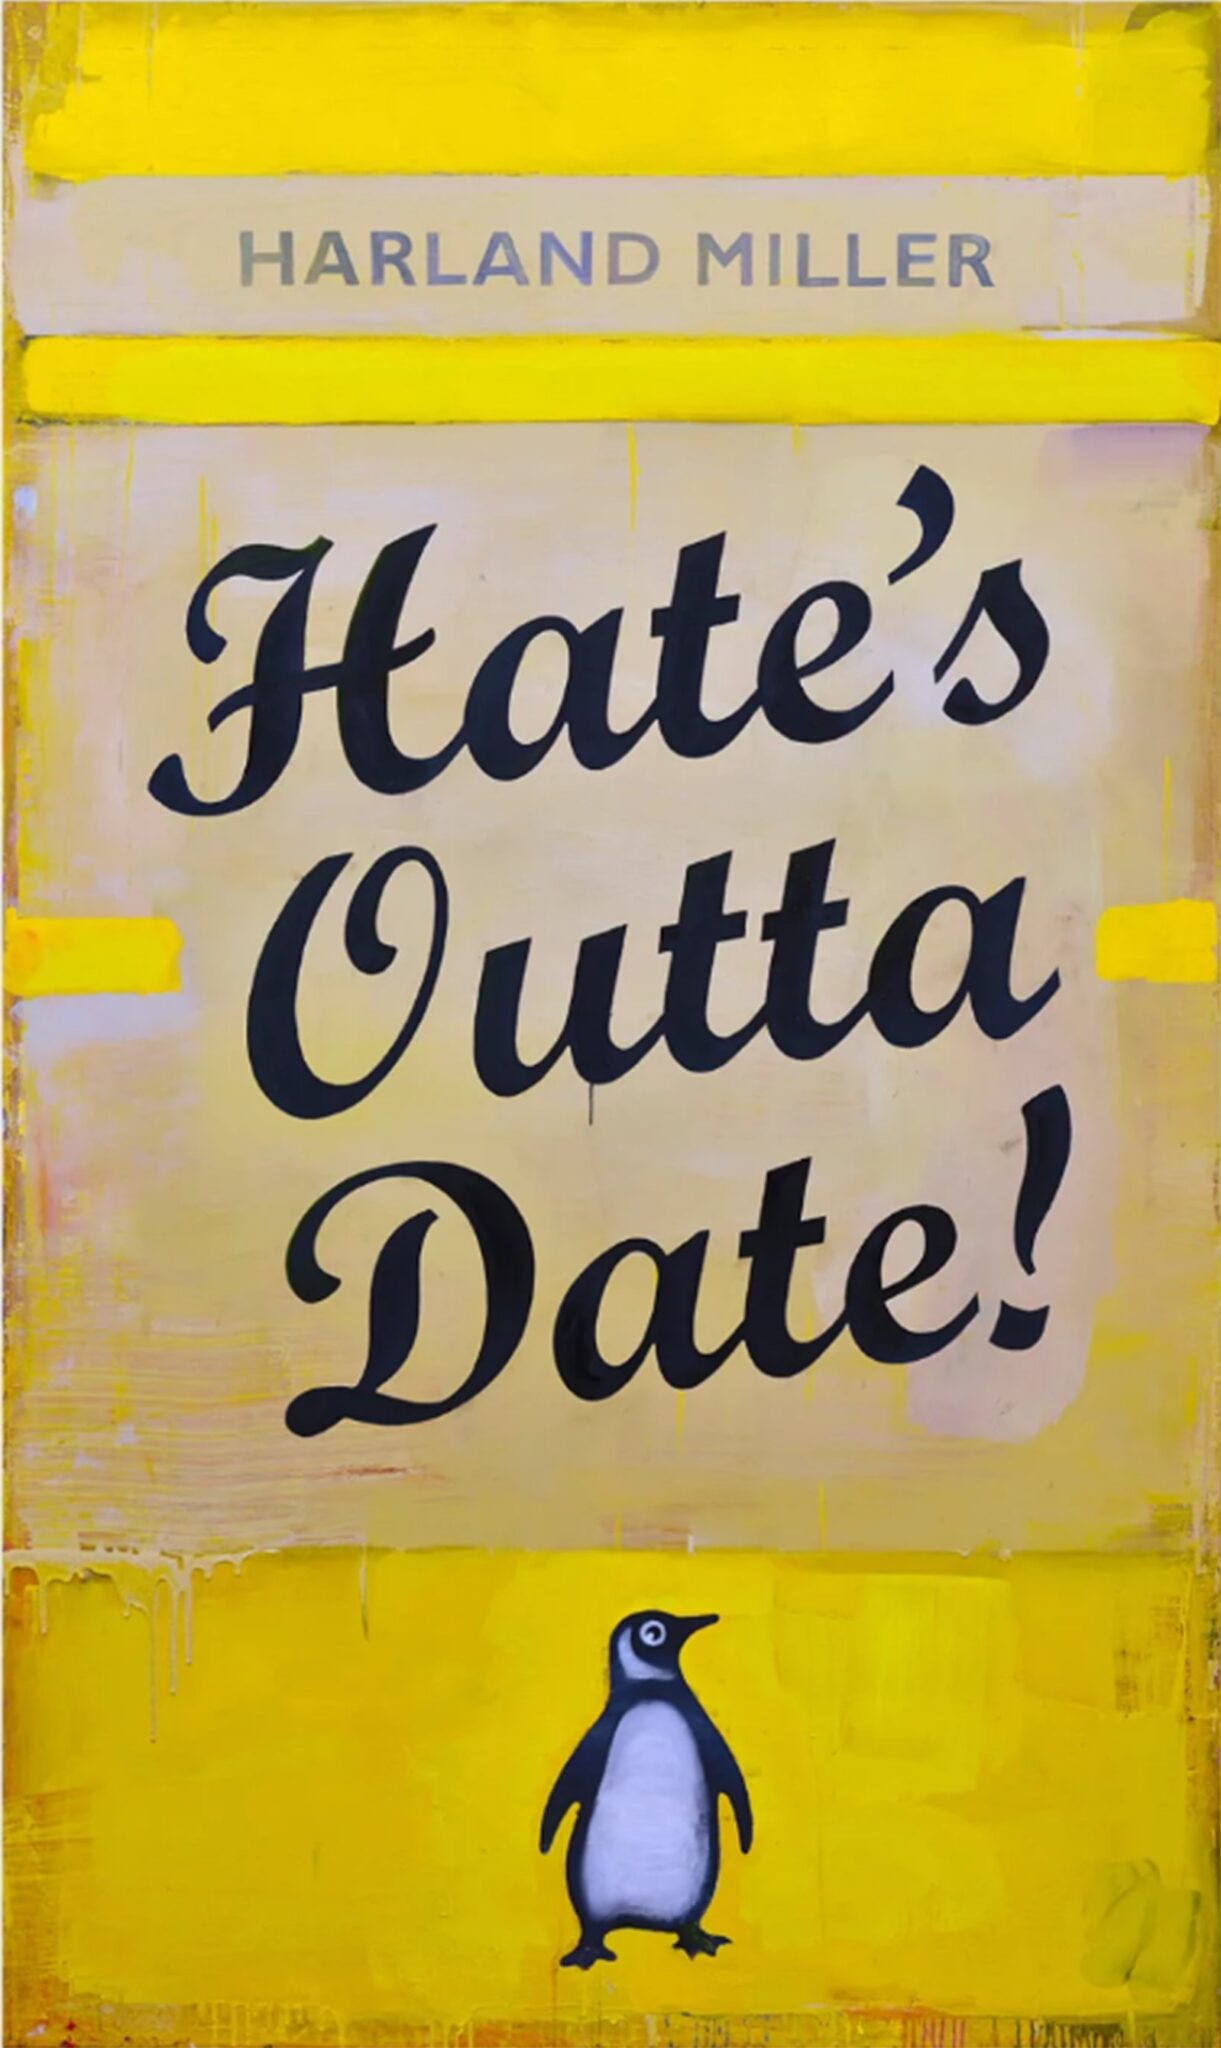 HM Hates outta date